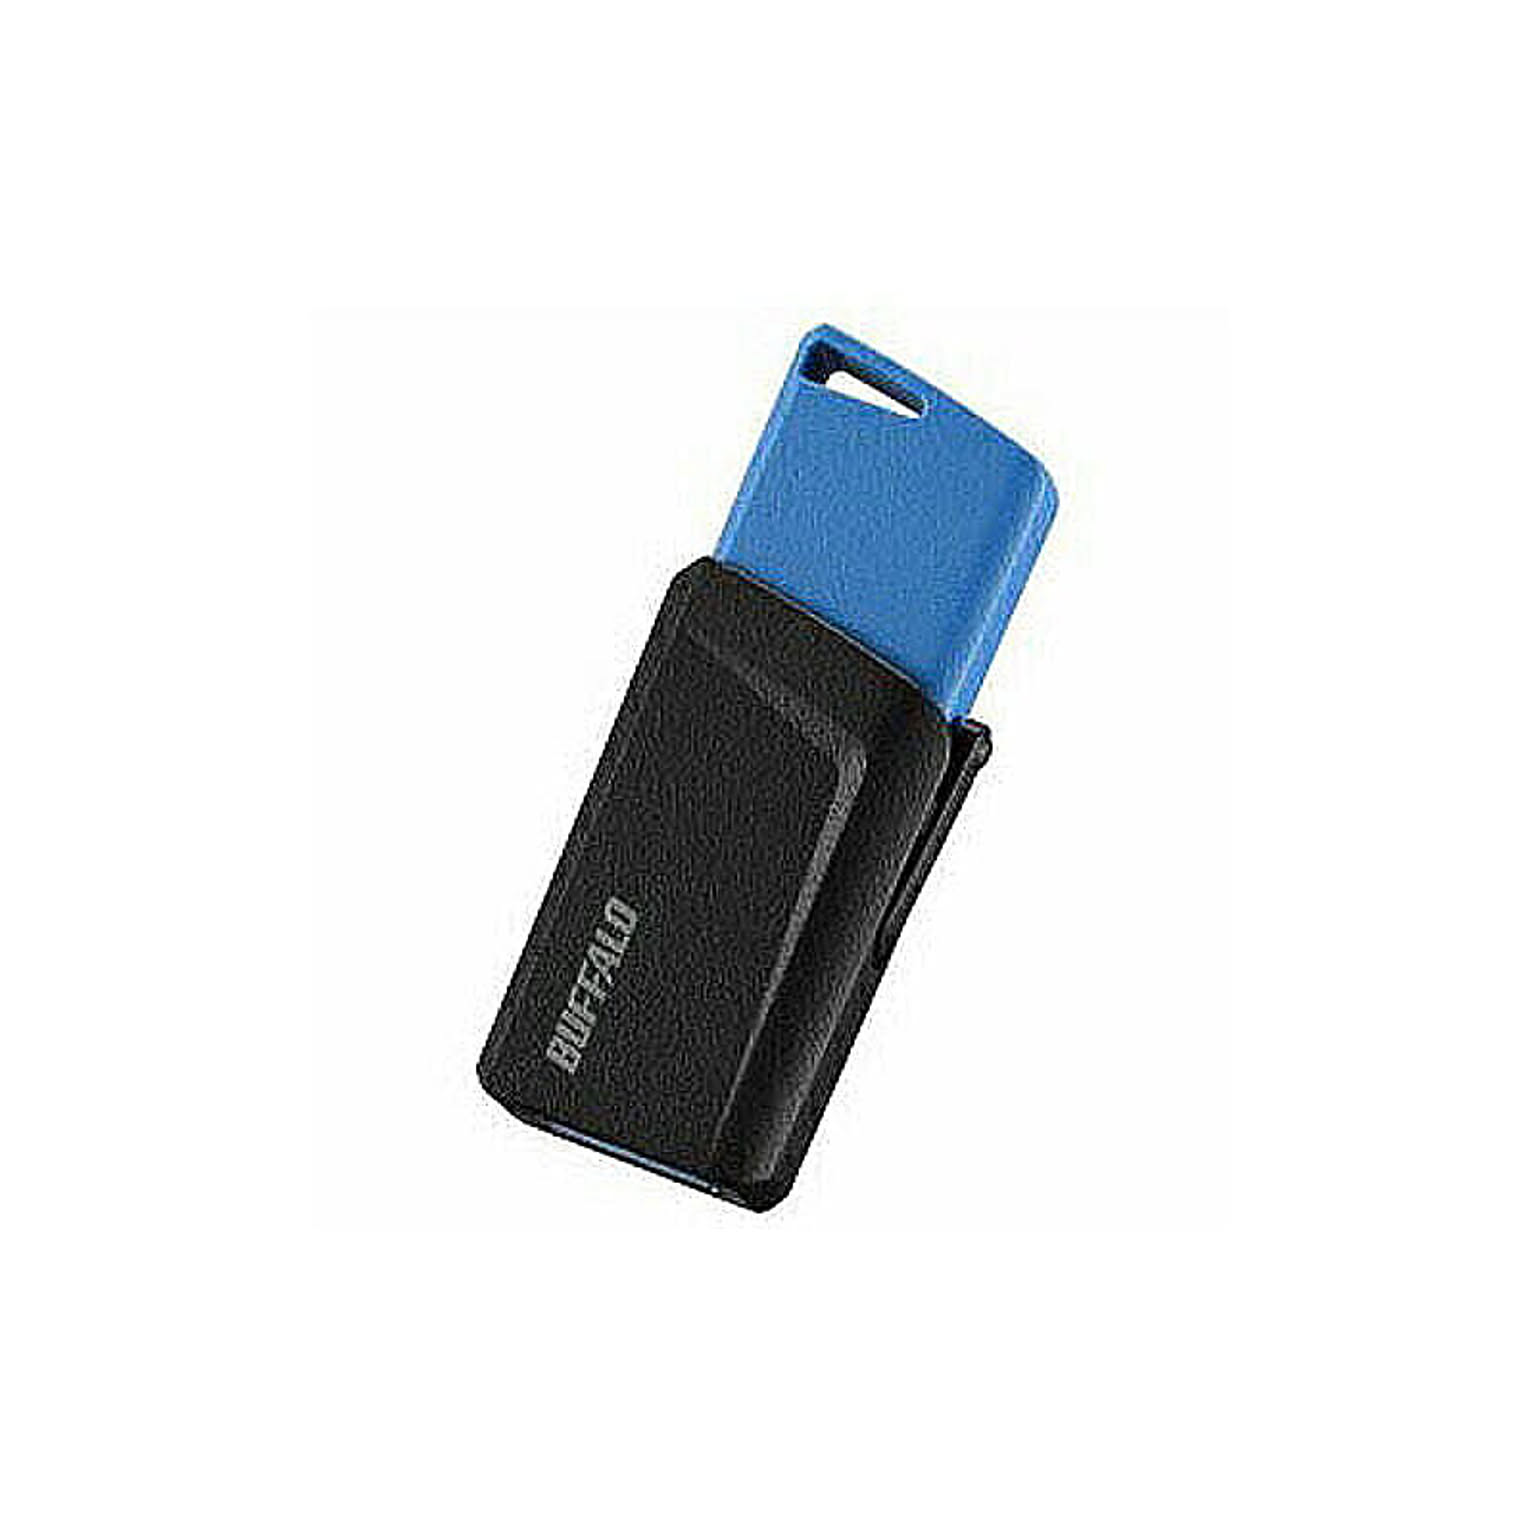 BUFFALO USBメモリ 64GB ブルー RUF3-SP64G-BL 管理No. 4981254048726